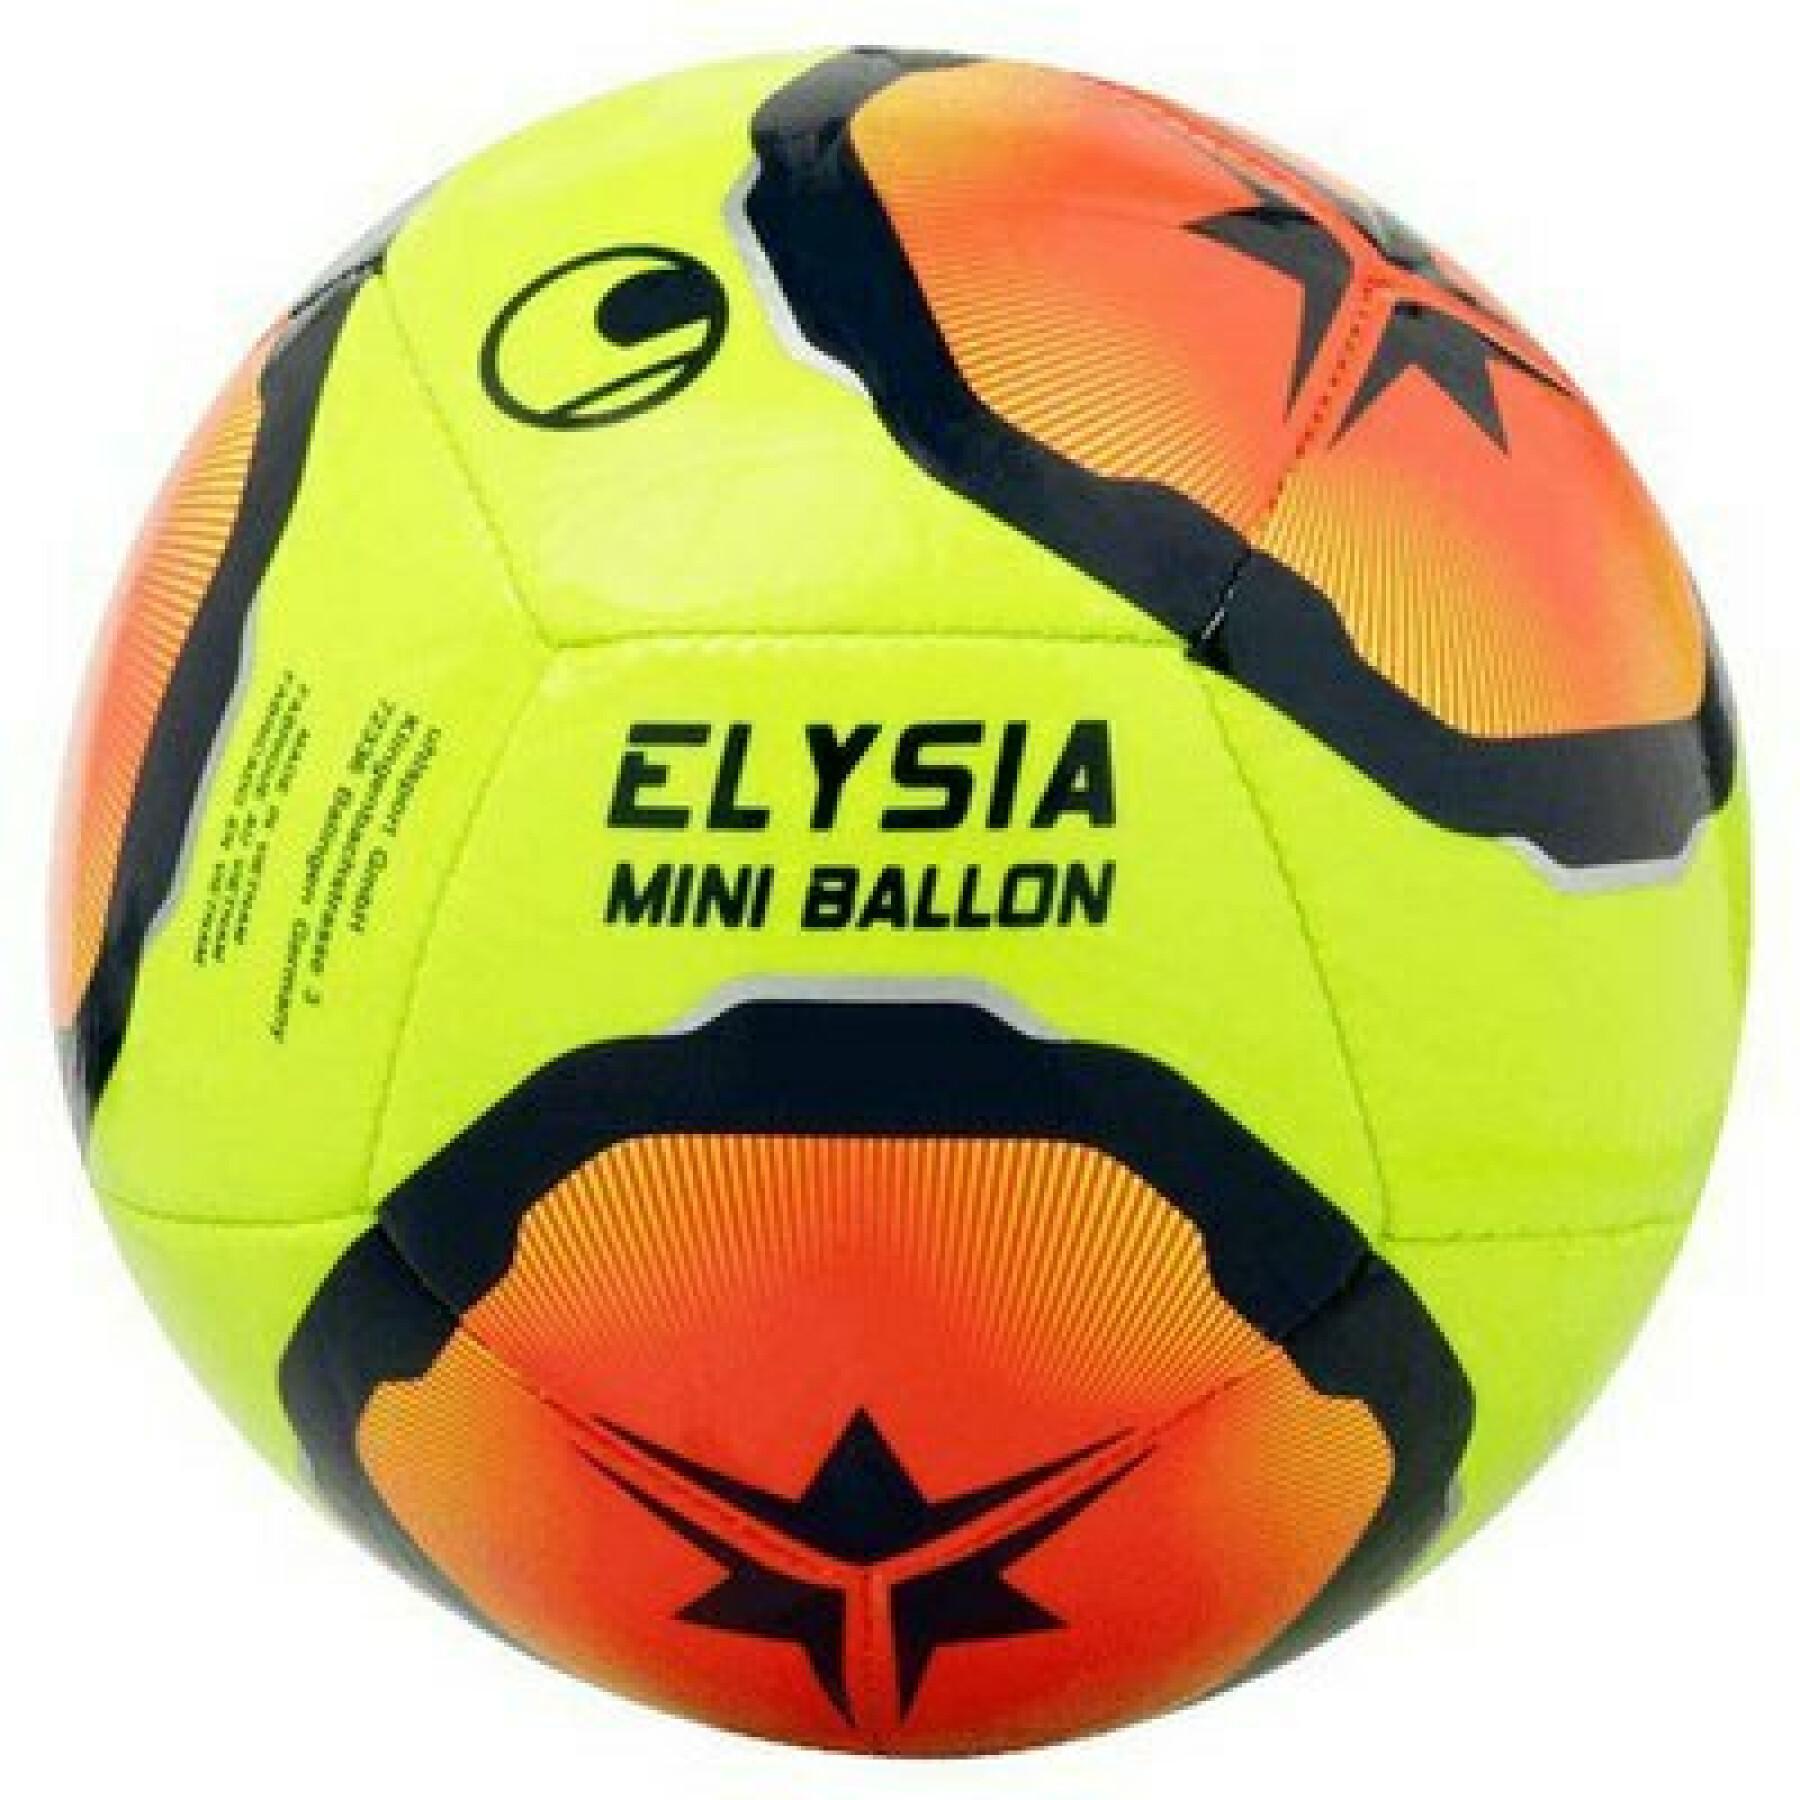 Miniballon Uhlsport Elysia